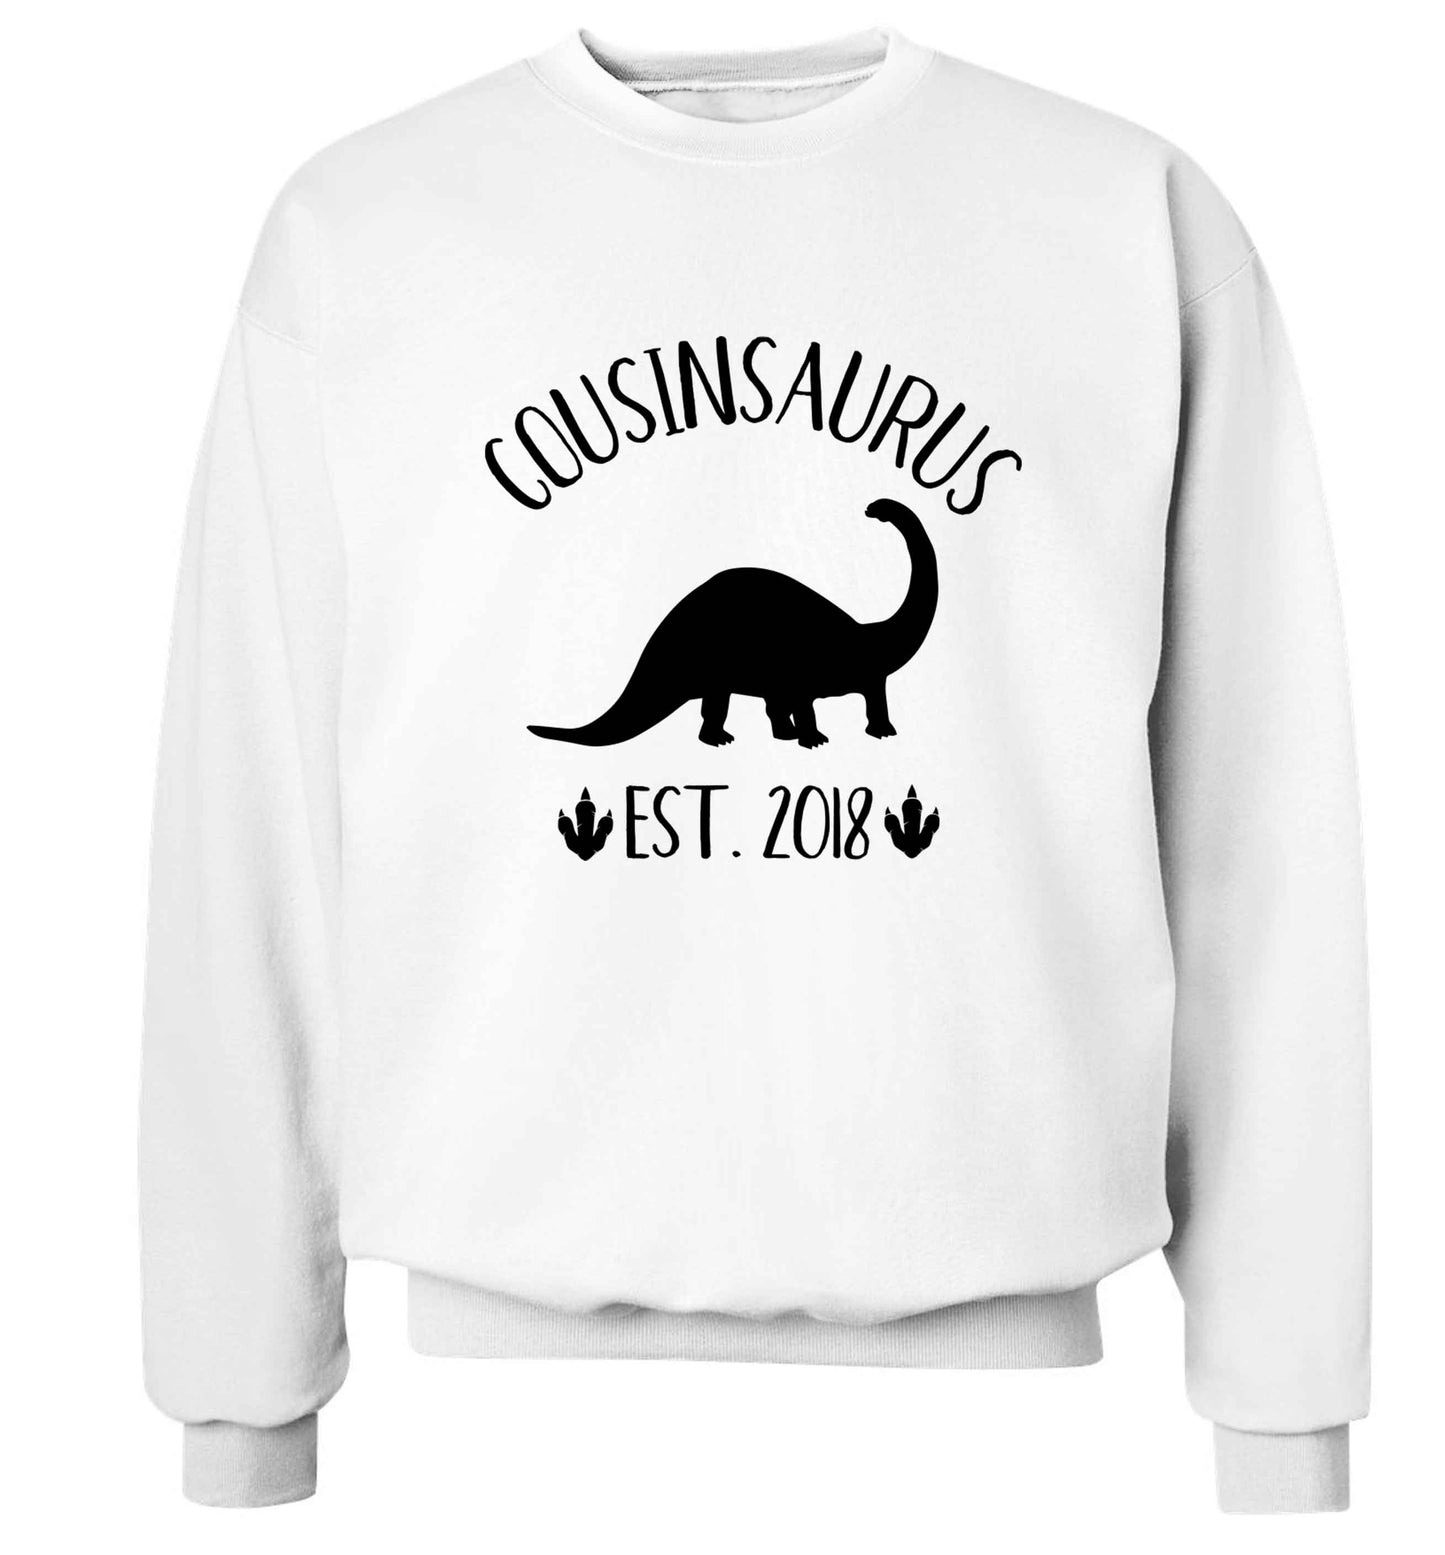 Personalised cousinsaurus since (custom date) Adult's unisex white Sweater 2XL